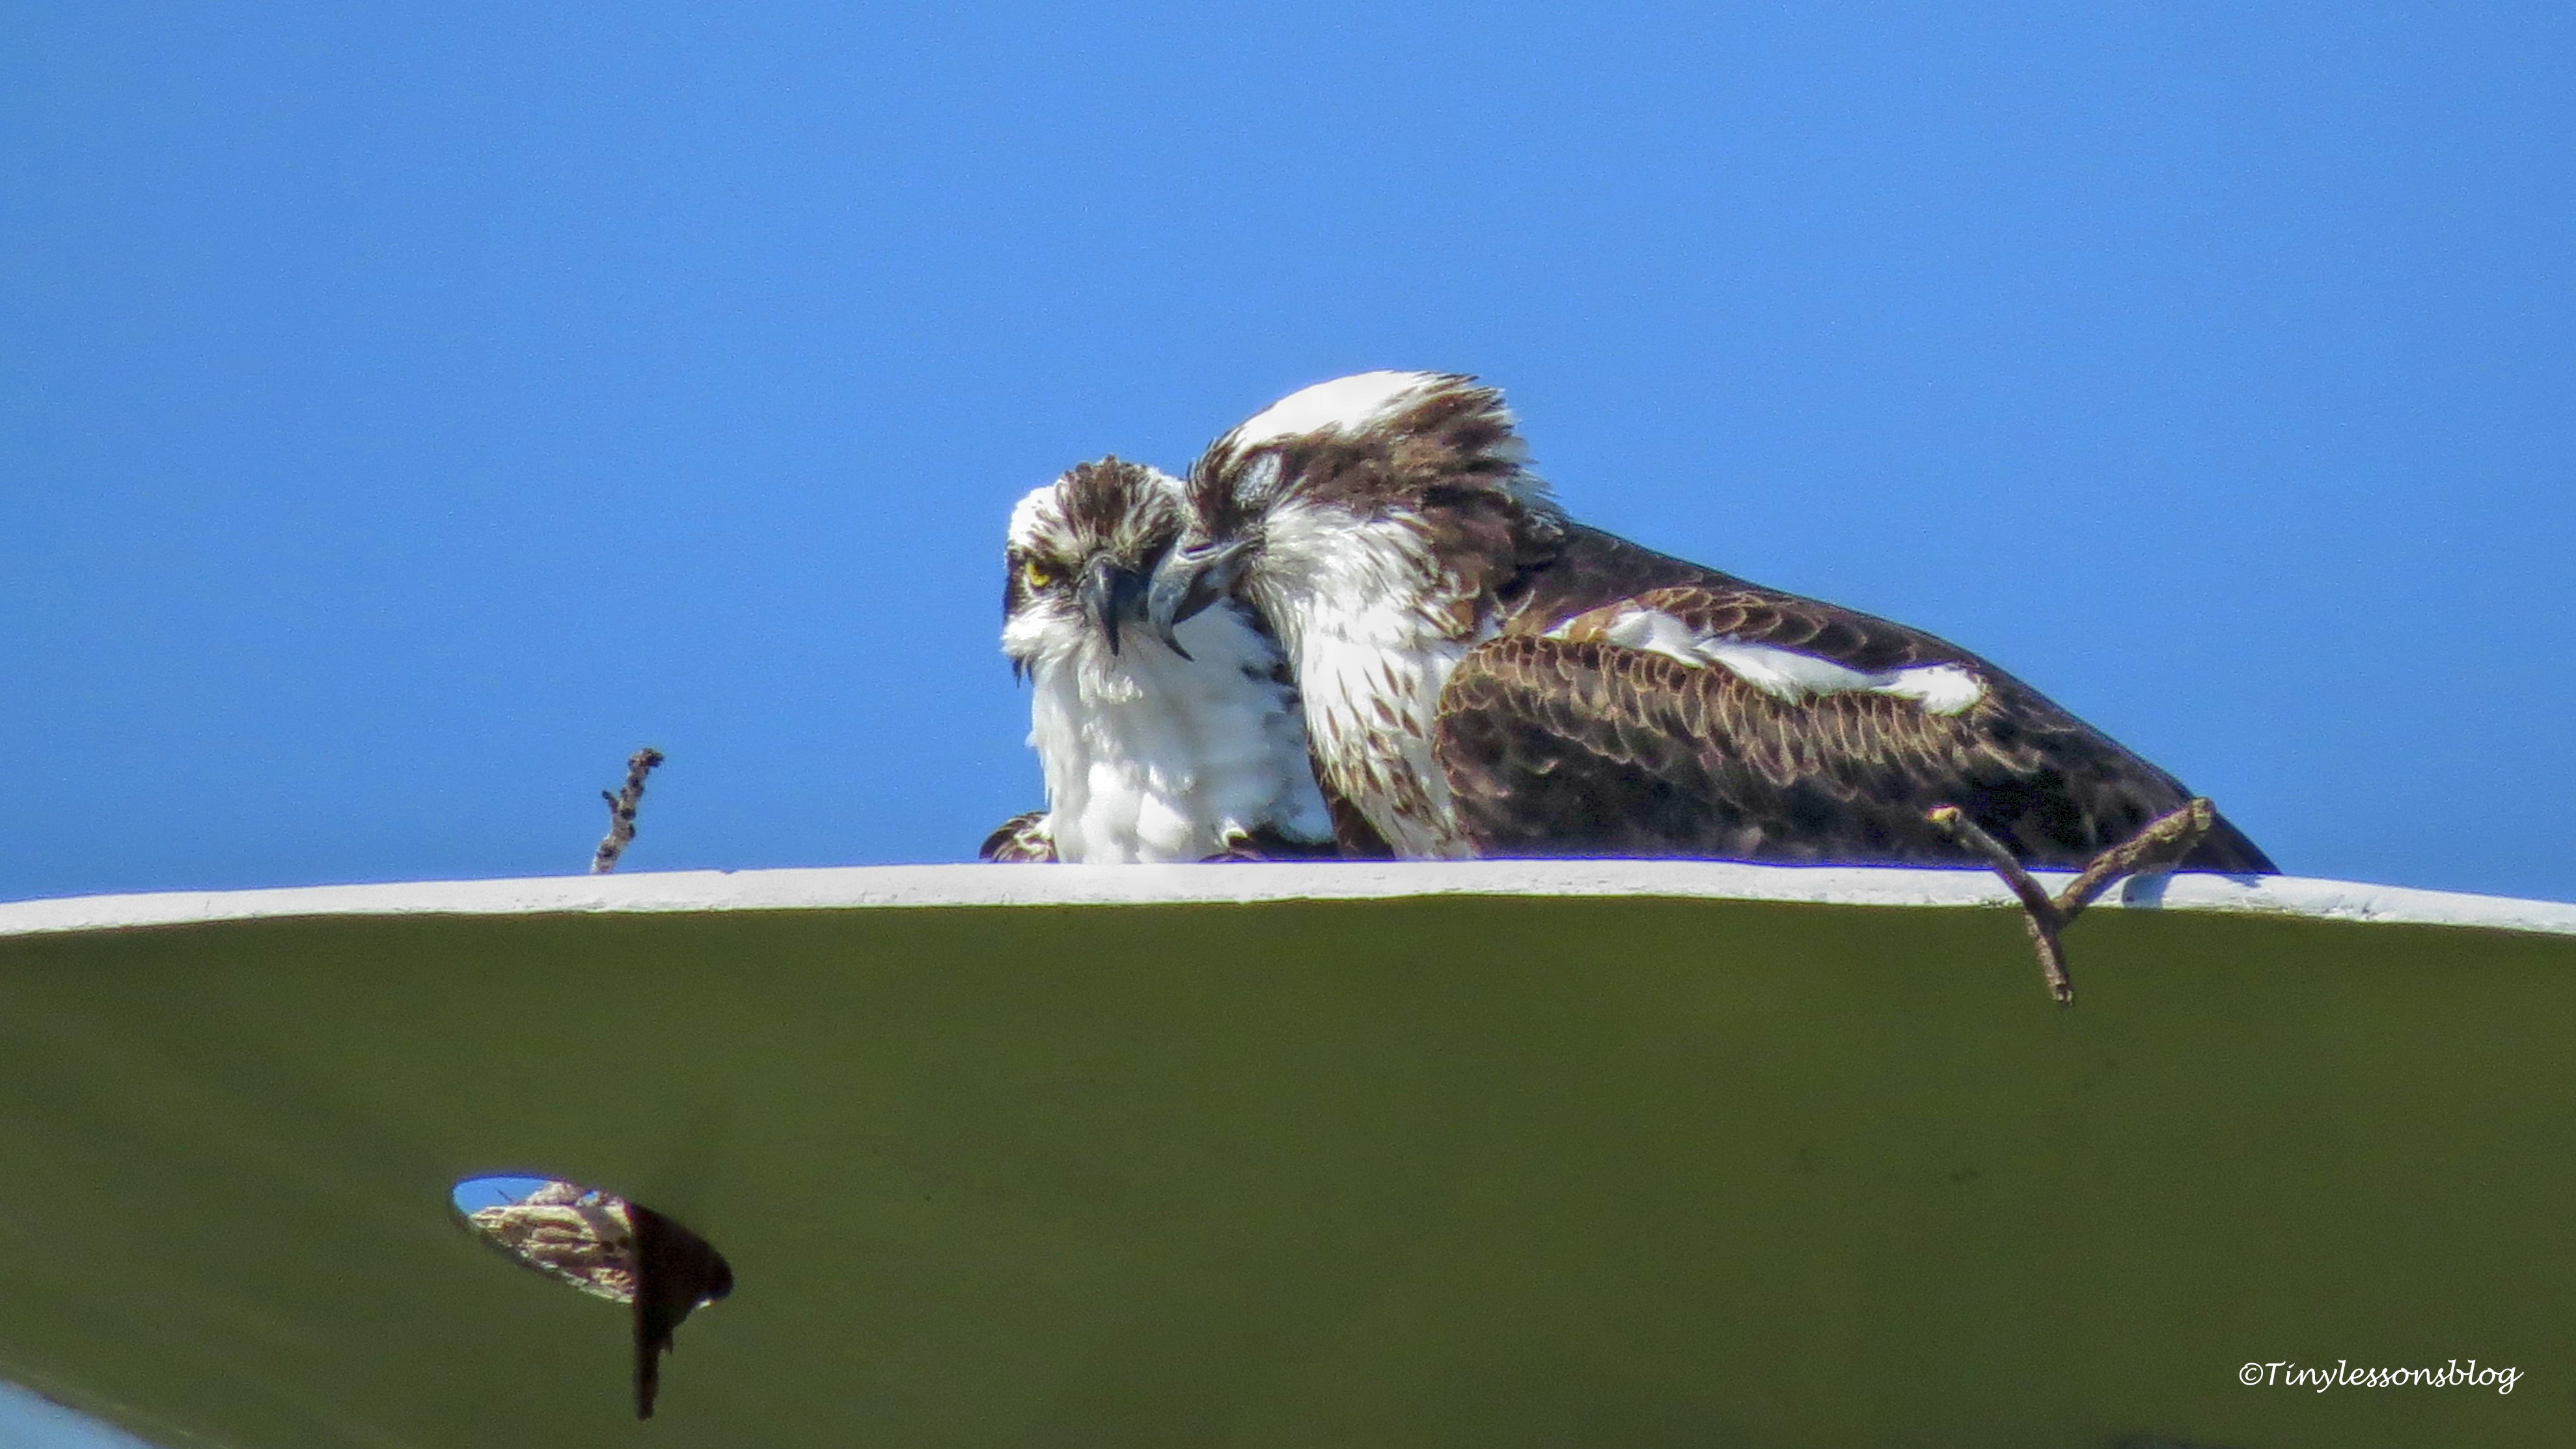 A Photographic Journey Through Nesting Season Inside an Ospreys Nest